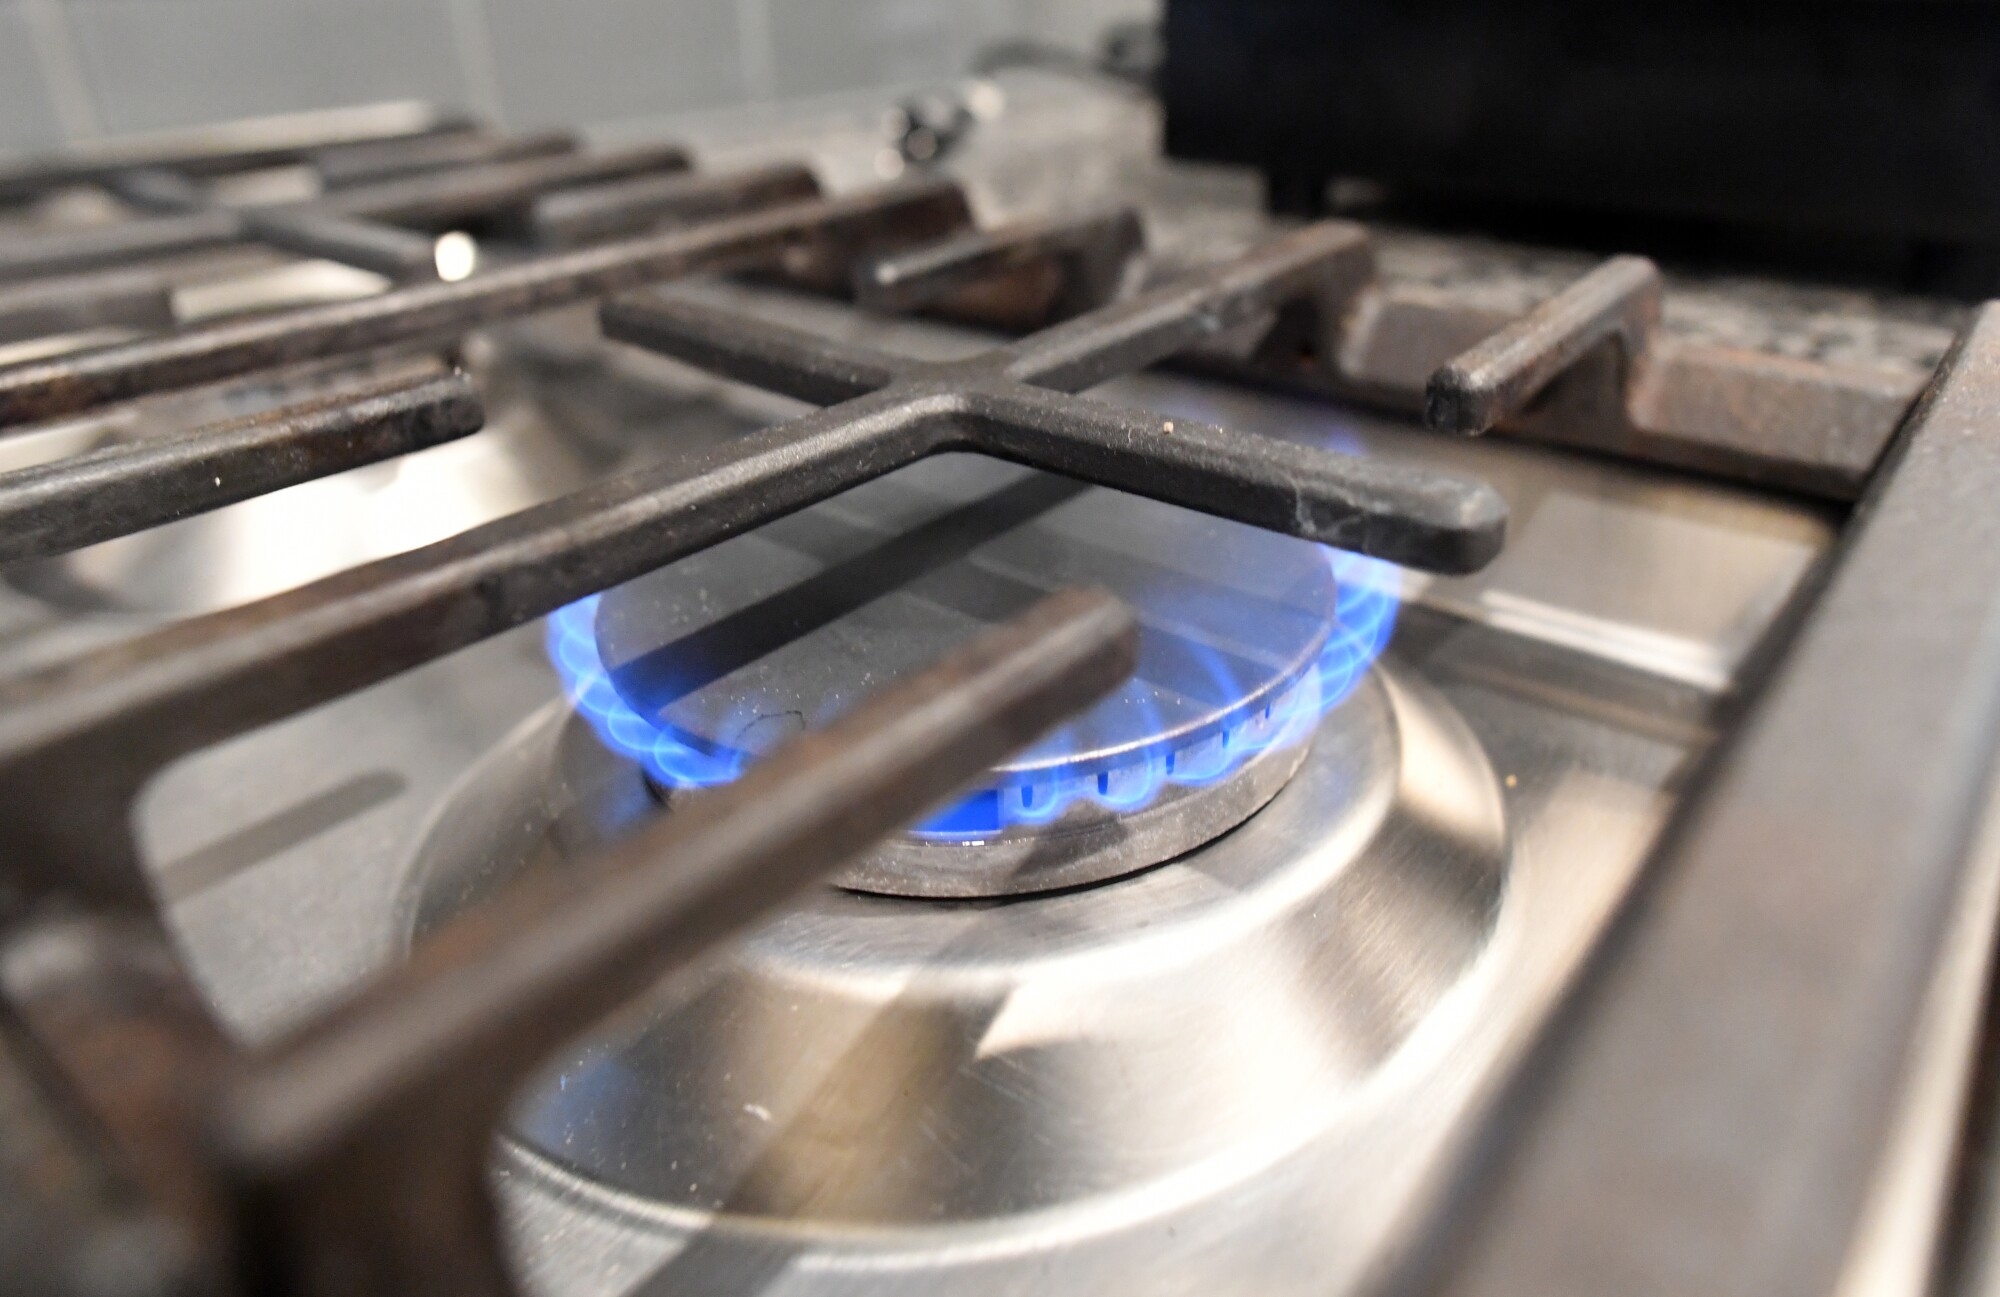 A flame burns blue on a gas stove burner.  